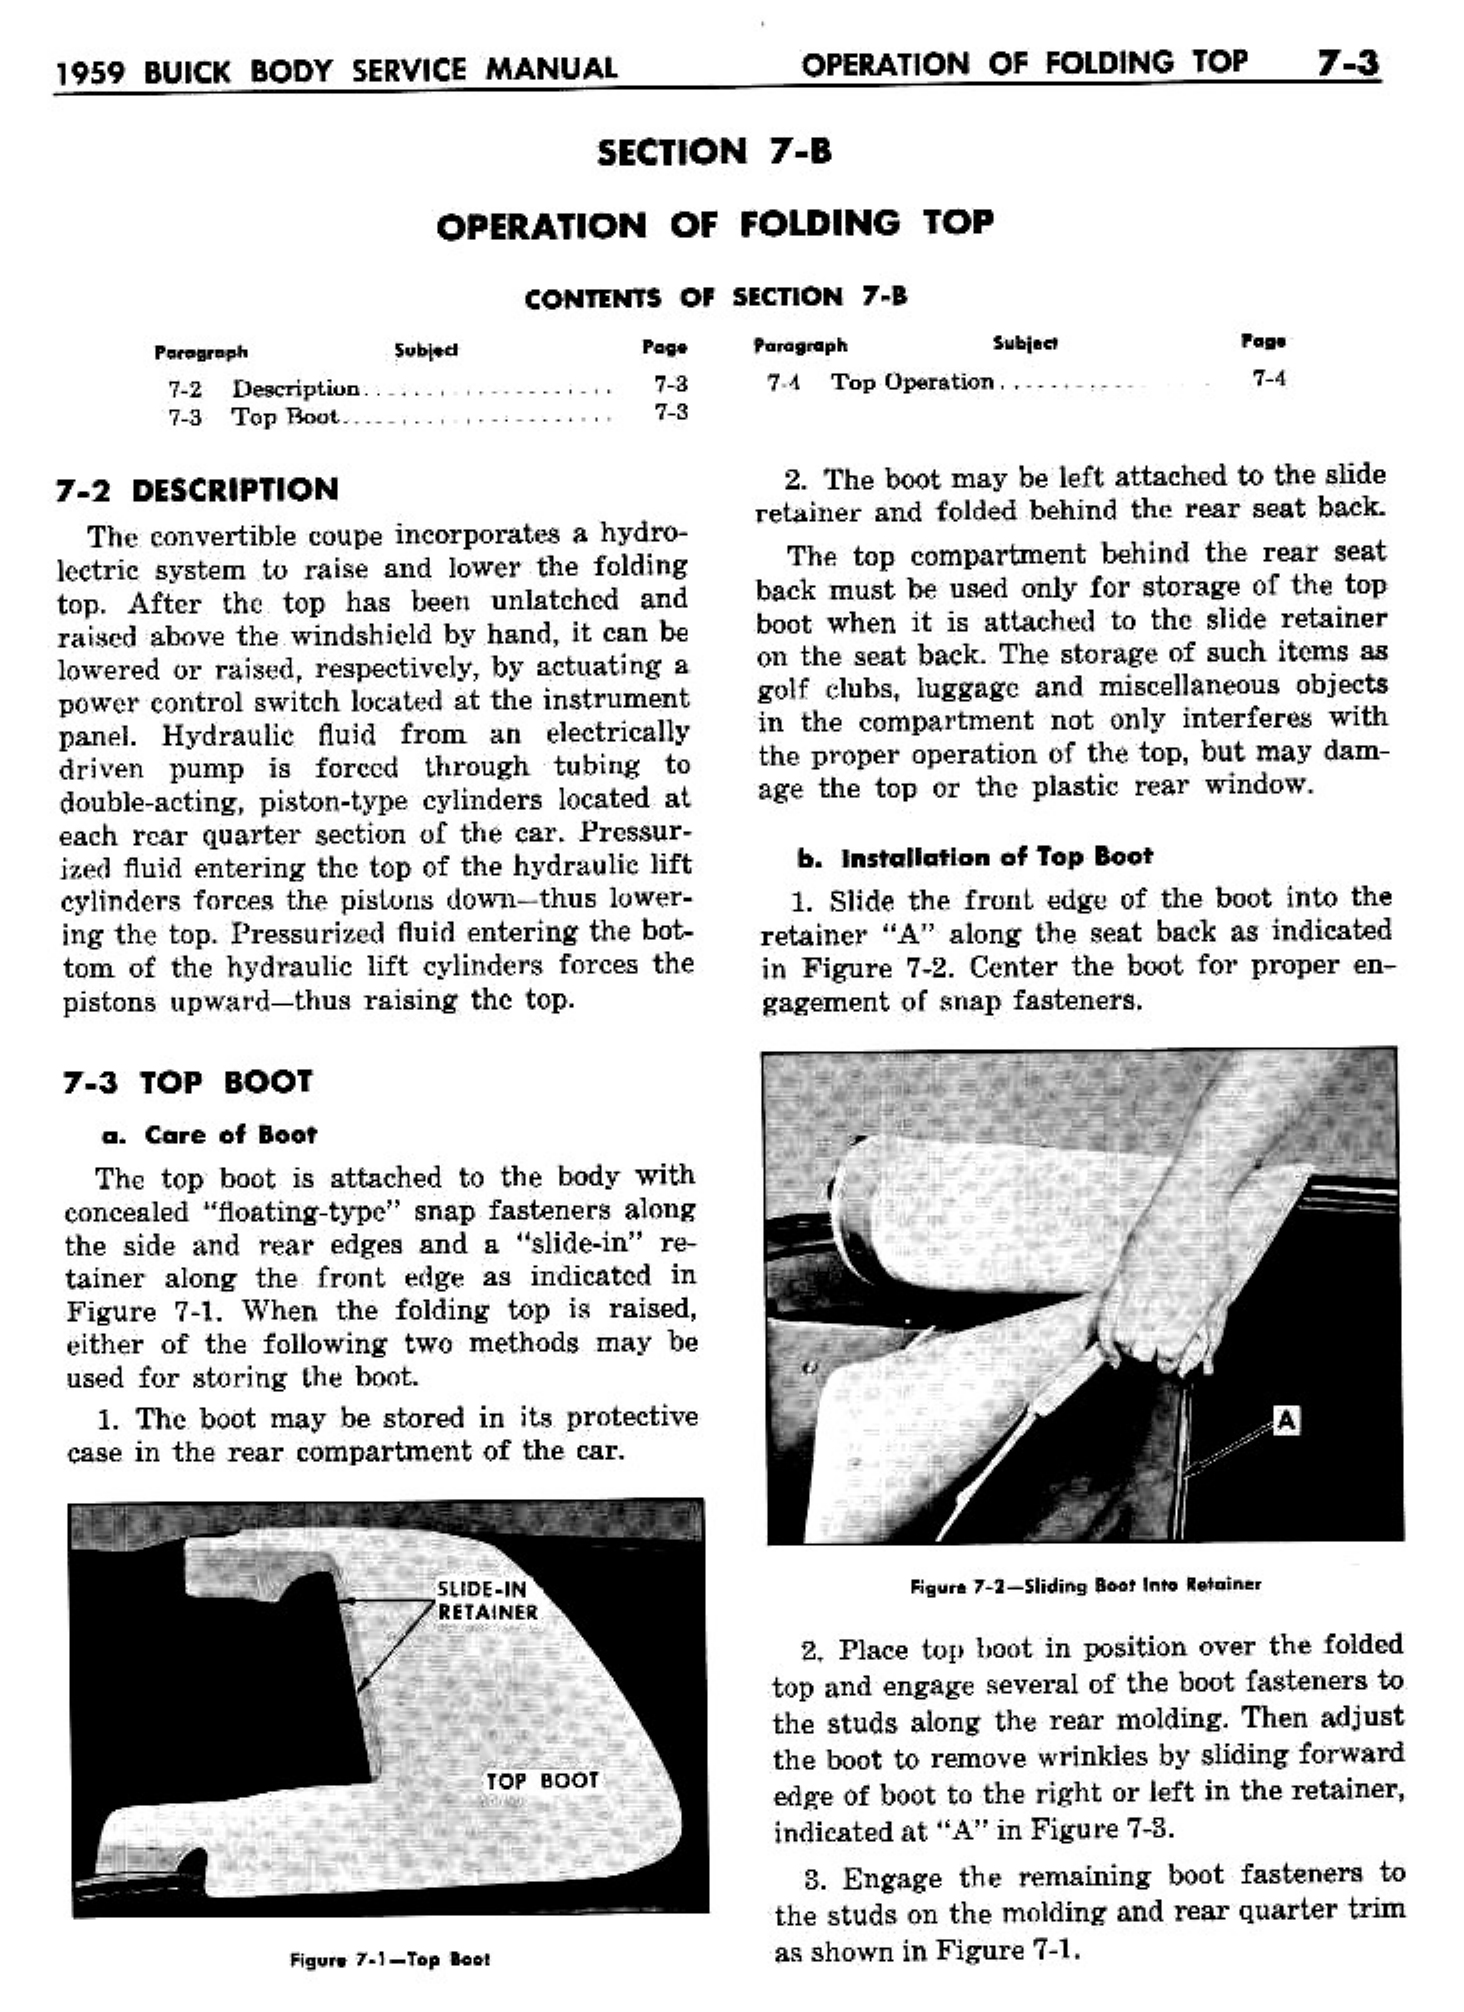 n_08 1959 Buick Body Service-Folding Top_3.jpg